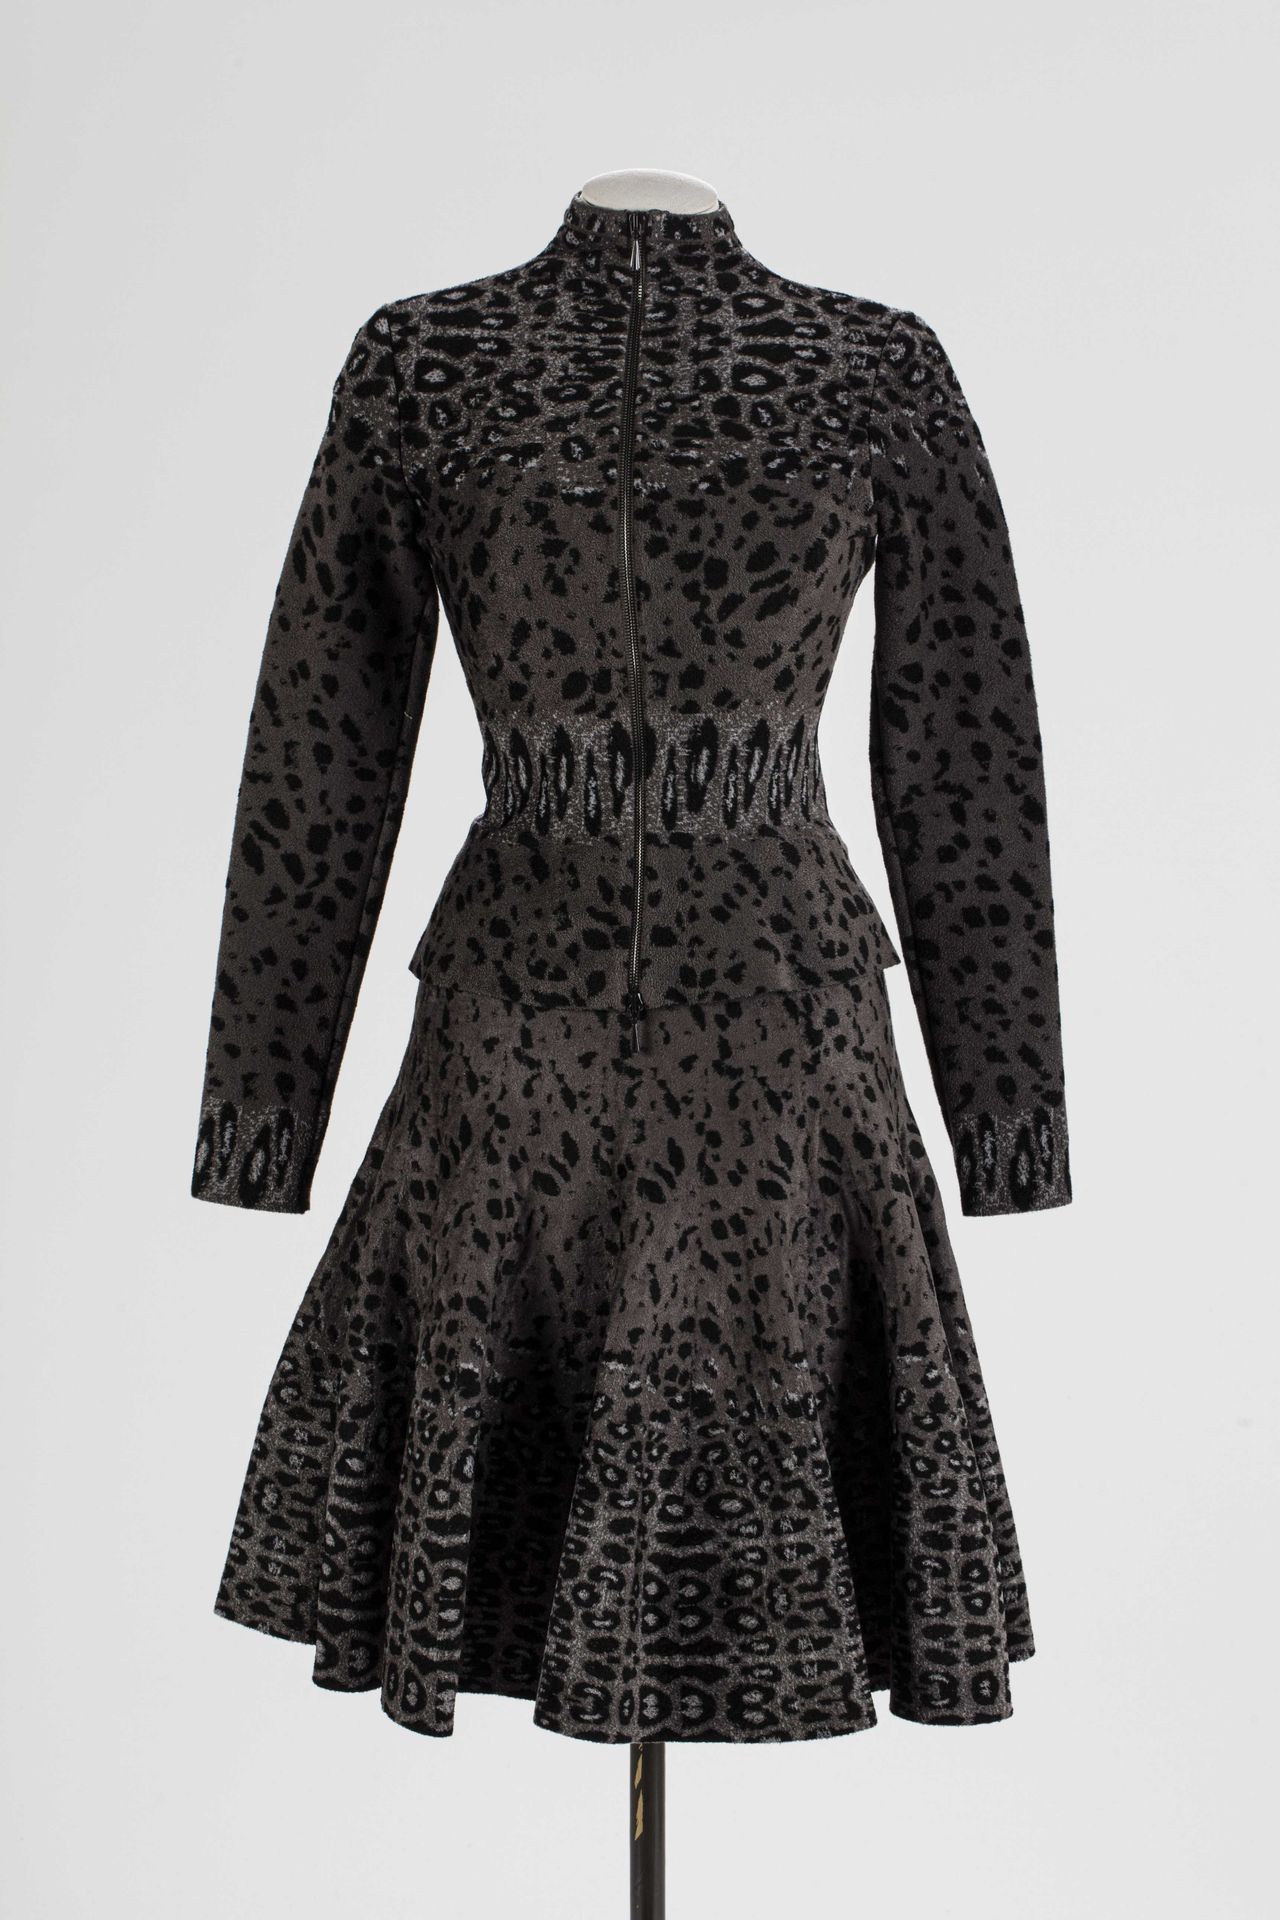 Null ALAIA : 粘胶和聚酰胺材质的服装，灰色背景上有一个黑豹的图案，包括一条喇叭裙和一件长袖的合身小外套，用拉链扣住。

T.36